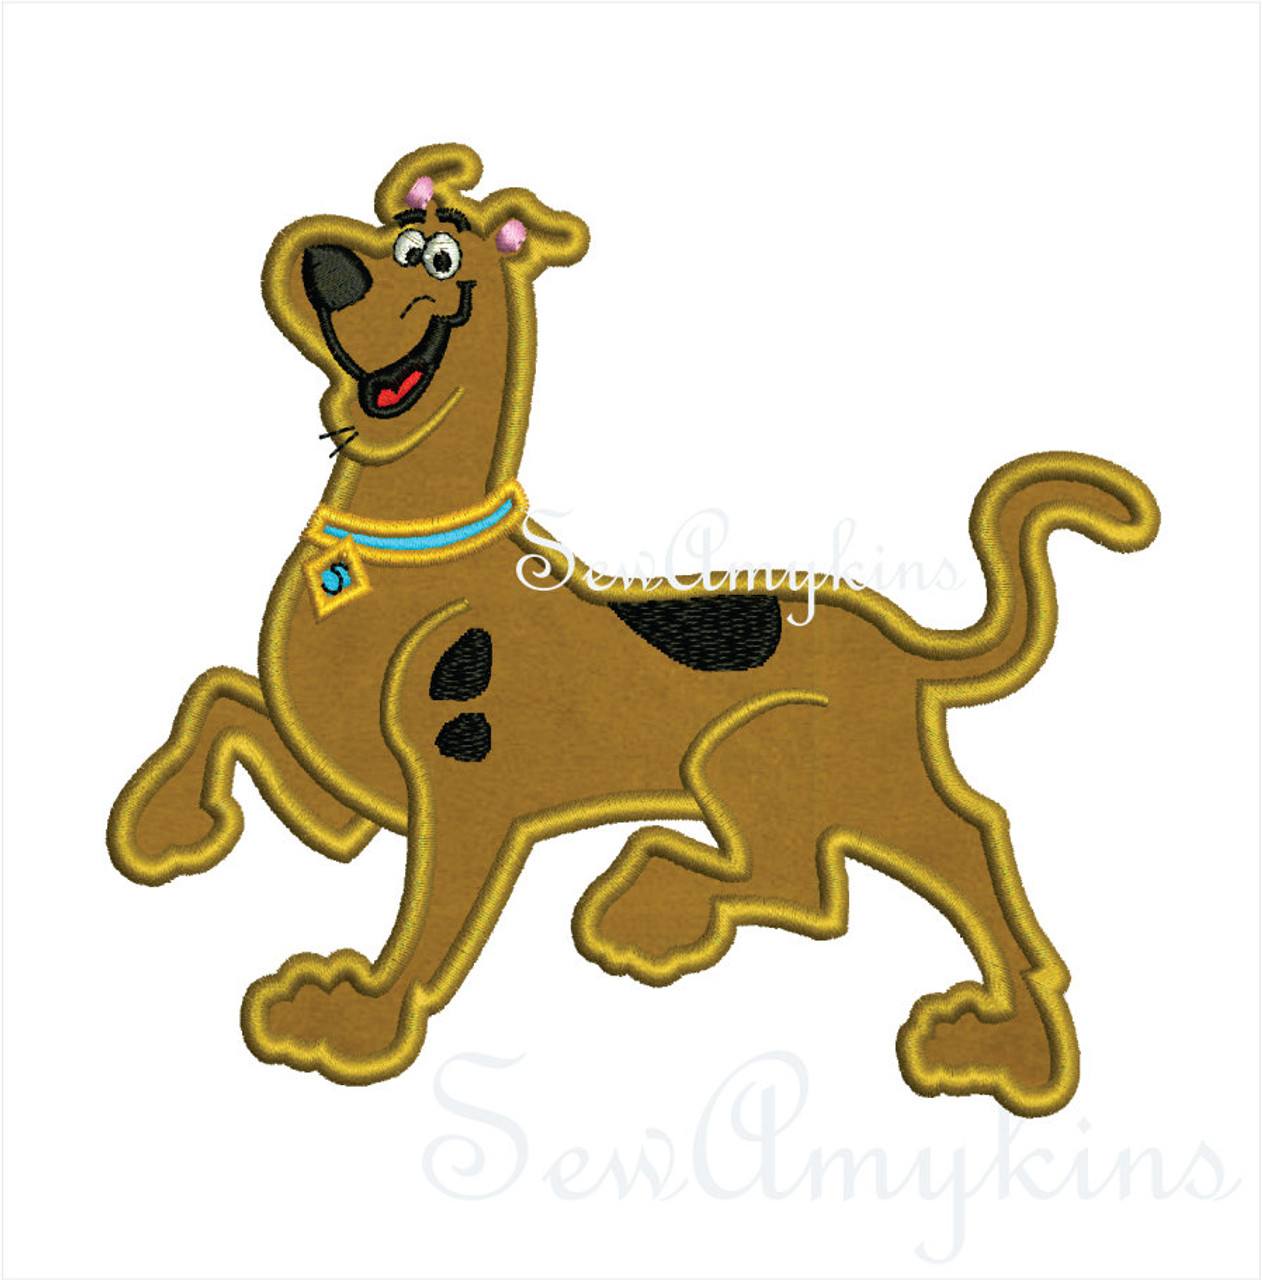 Scooby Doo applique embroidery design - SewAmykins